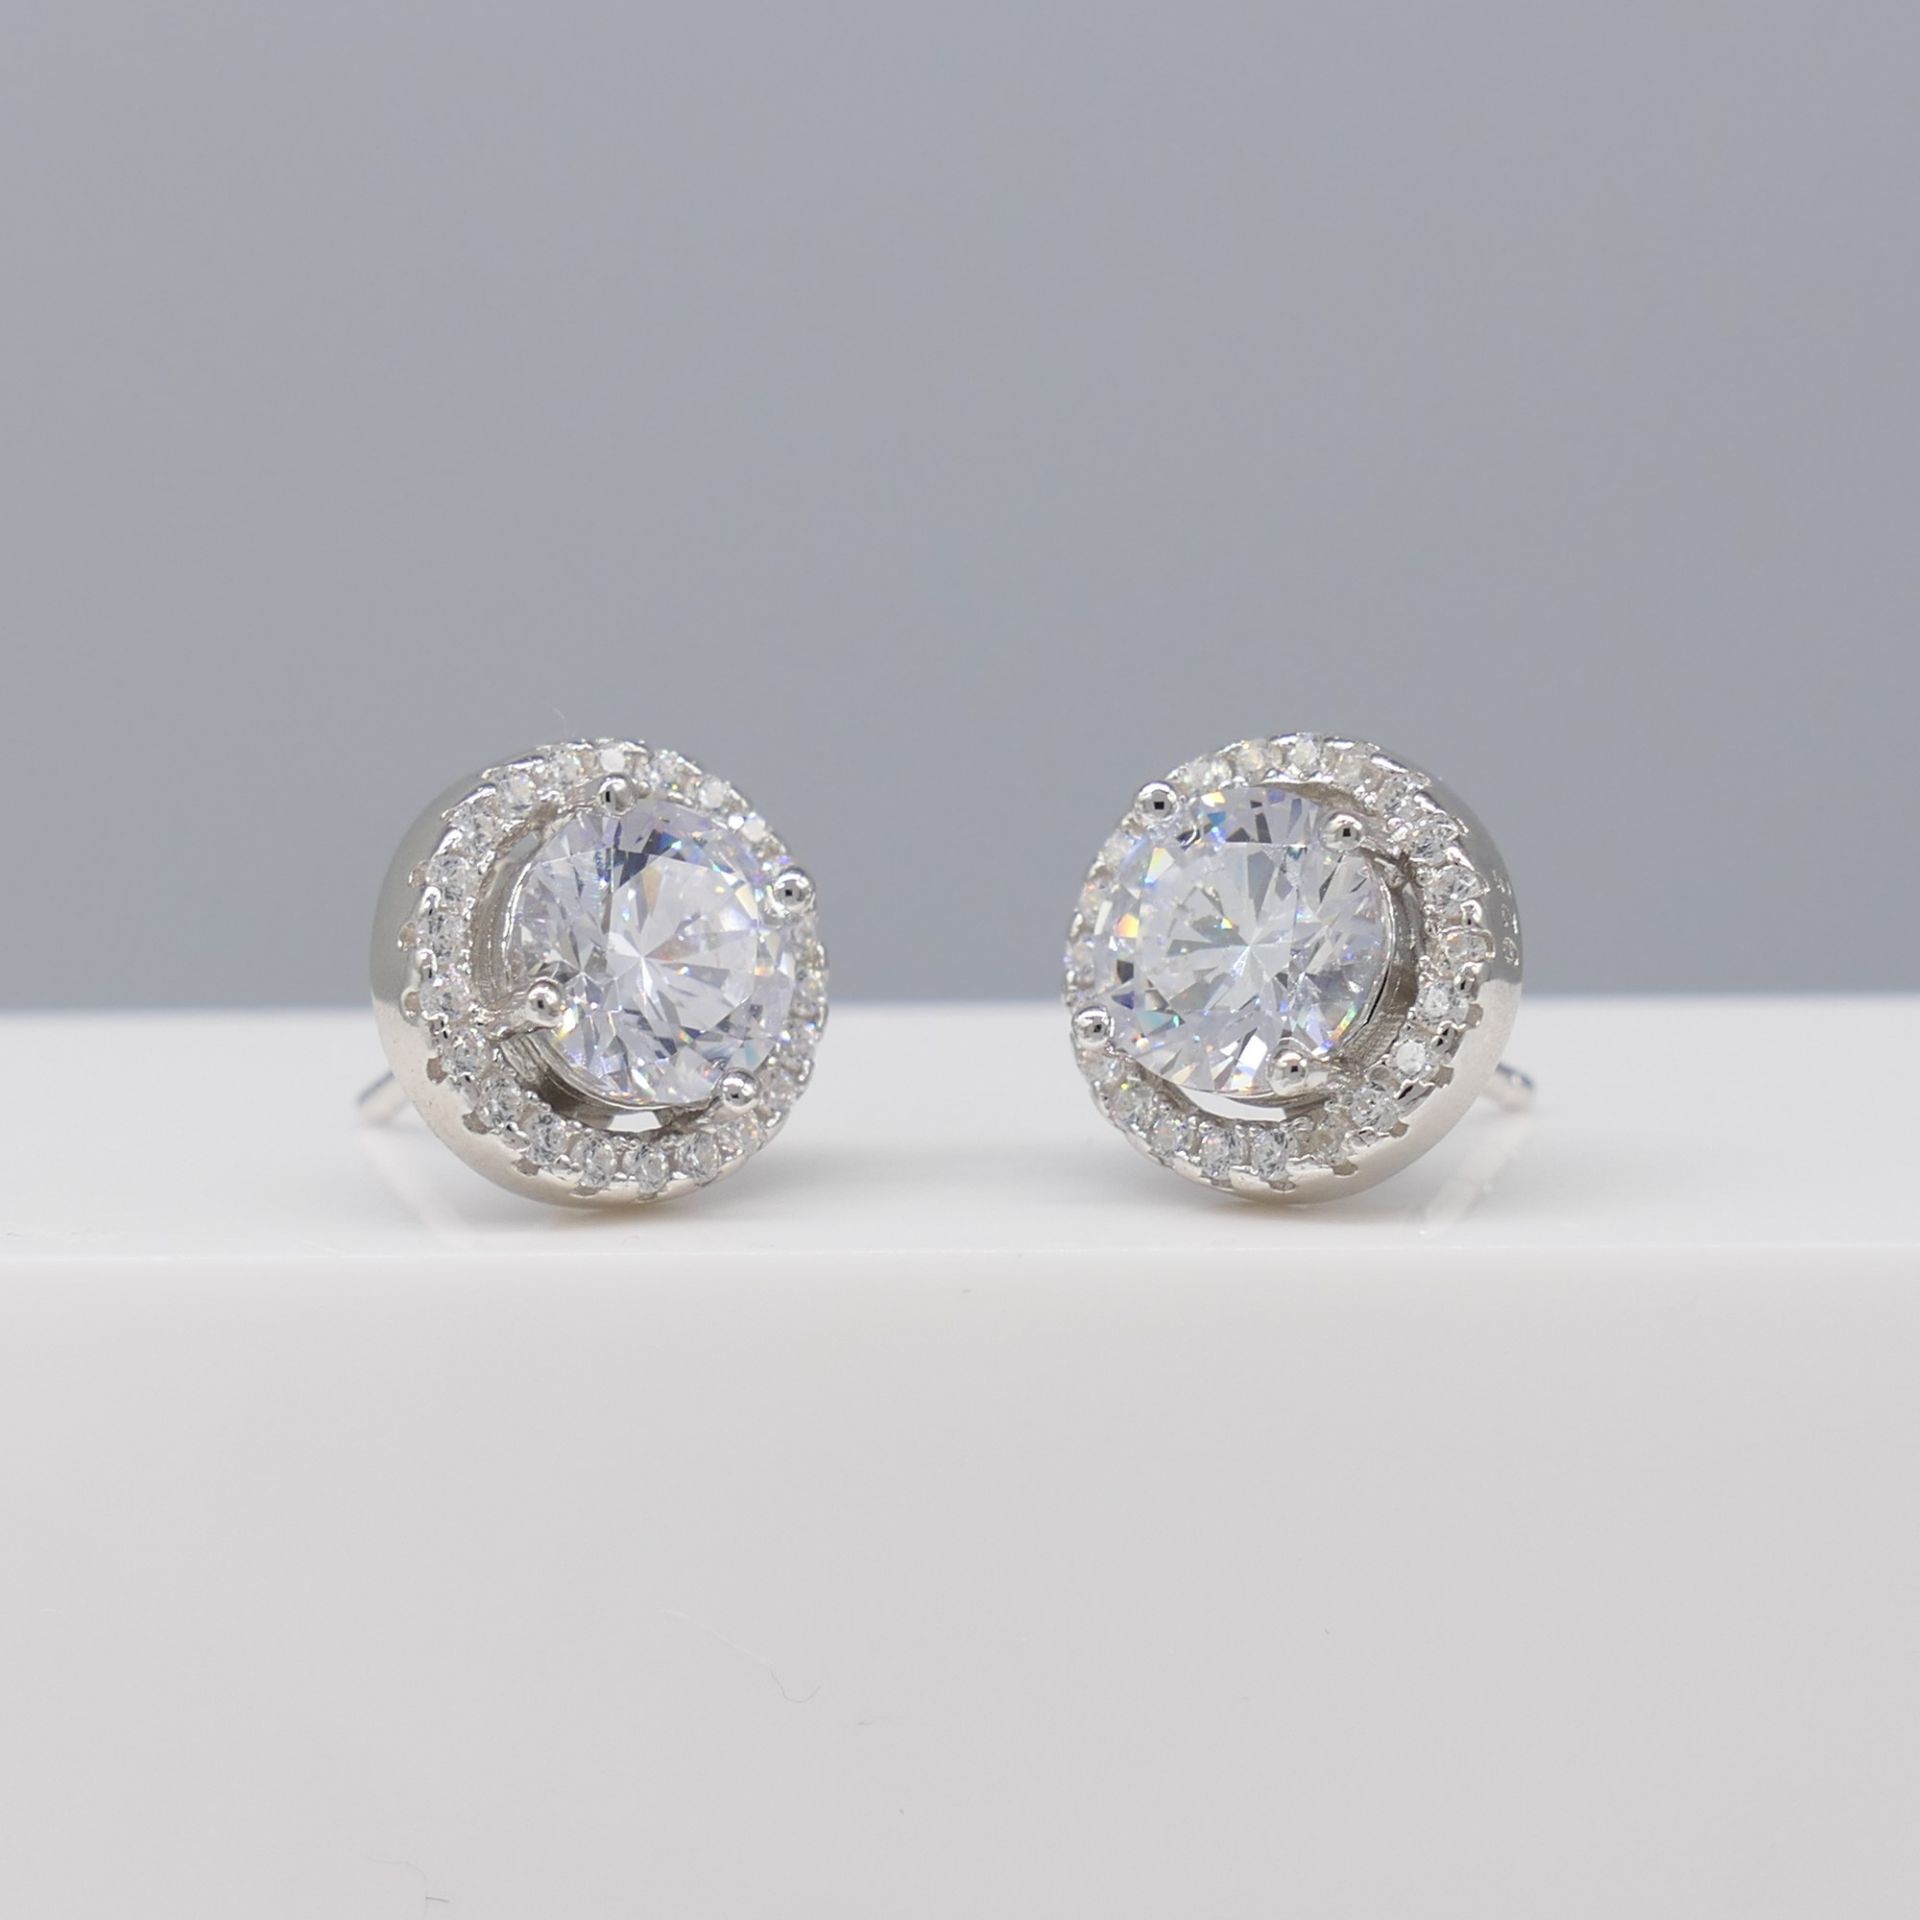 Pair of sterling silver halo stud earrings - Image 2 of 5